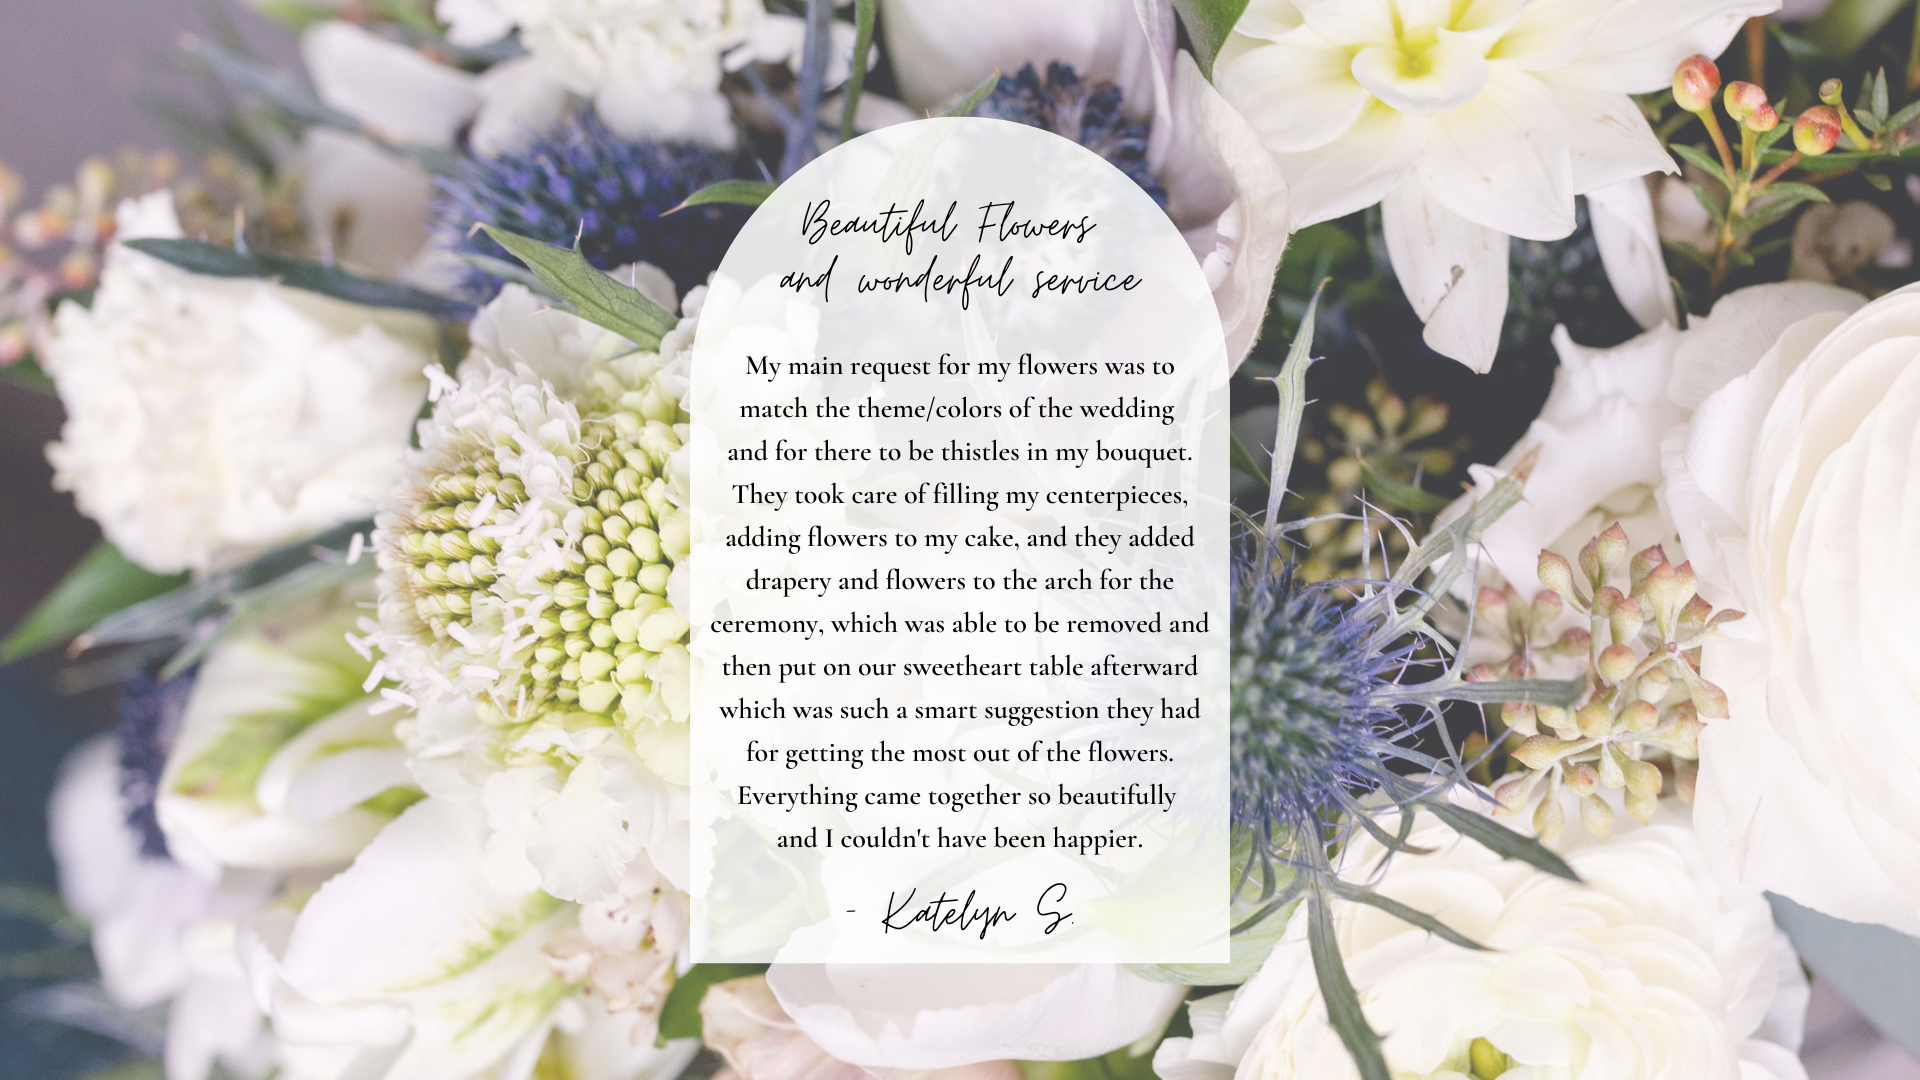 in-bloom-florist-wedding-review-13.png